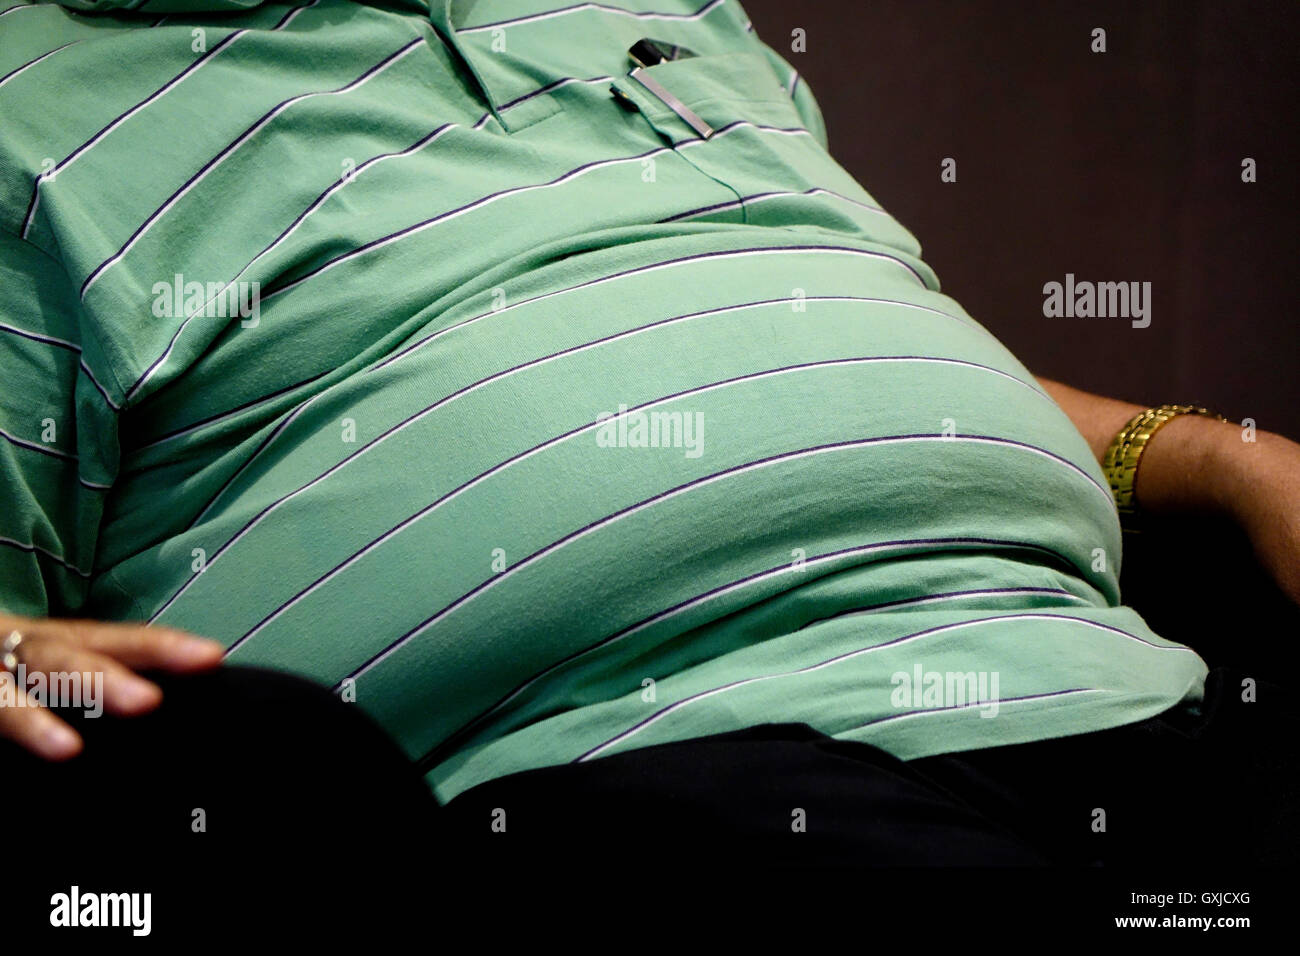 Pancia,l'obesità,flab,sovrappeso,l'uomo,indiana, striped shirt,seduta,slump,Panza,fat,,T-shirt.tee shirt Foto Stock